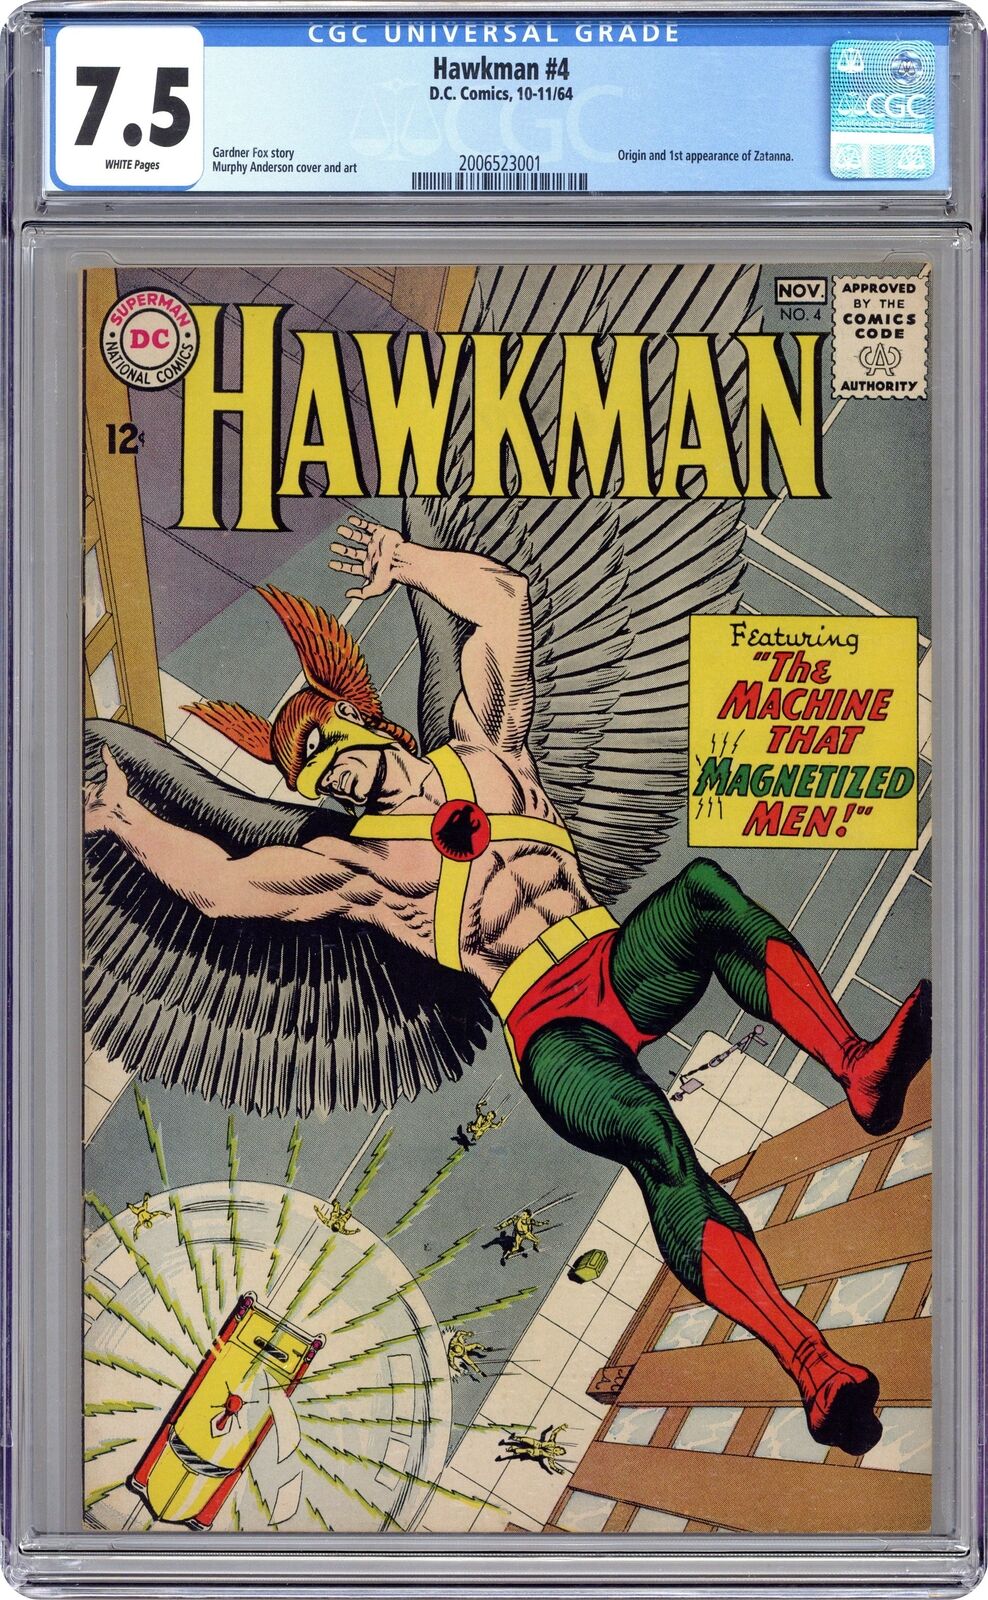 Hawkman #4 CGC 7.5 1964 2006523001 1st app. and origin Zatanna